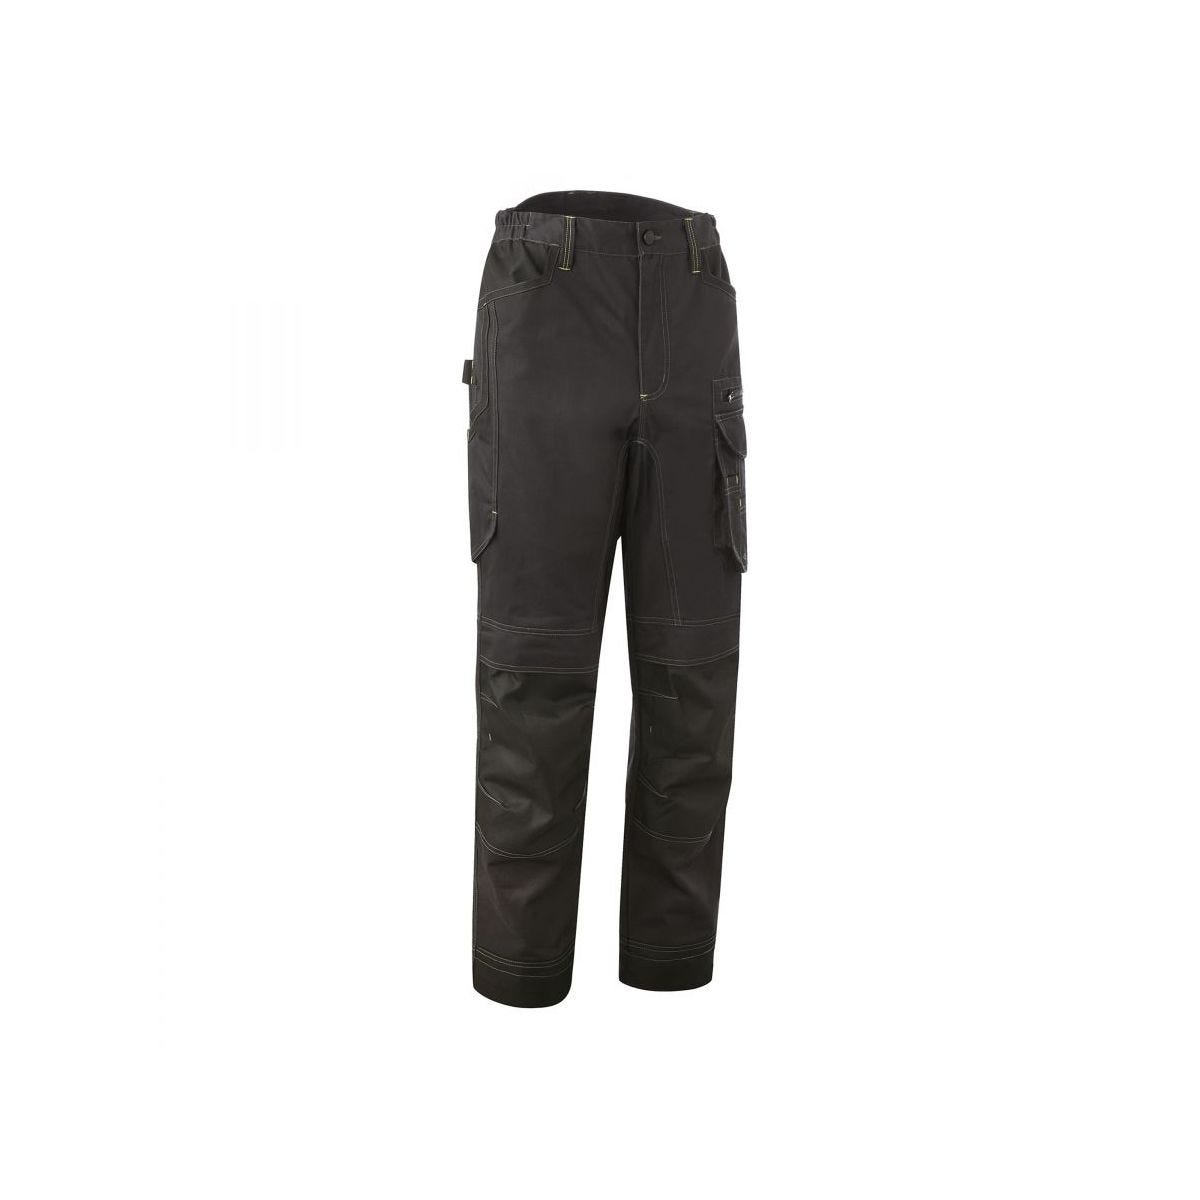 Pantalon BARVA Anthracite-Lime - Coverguard - Taille 2XL 0